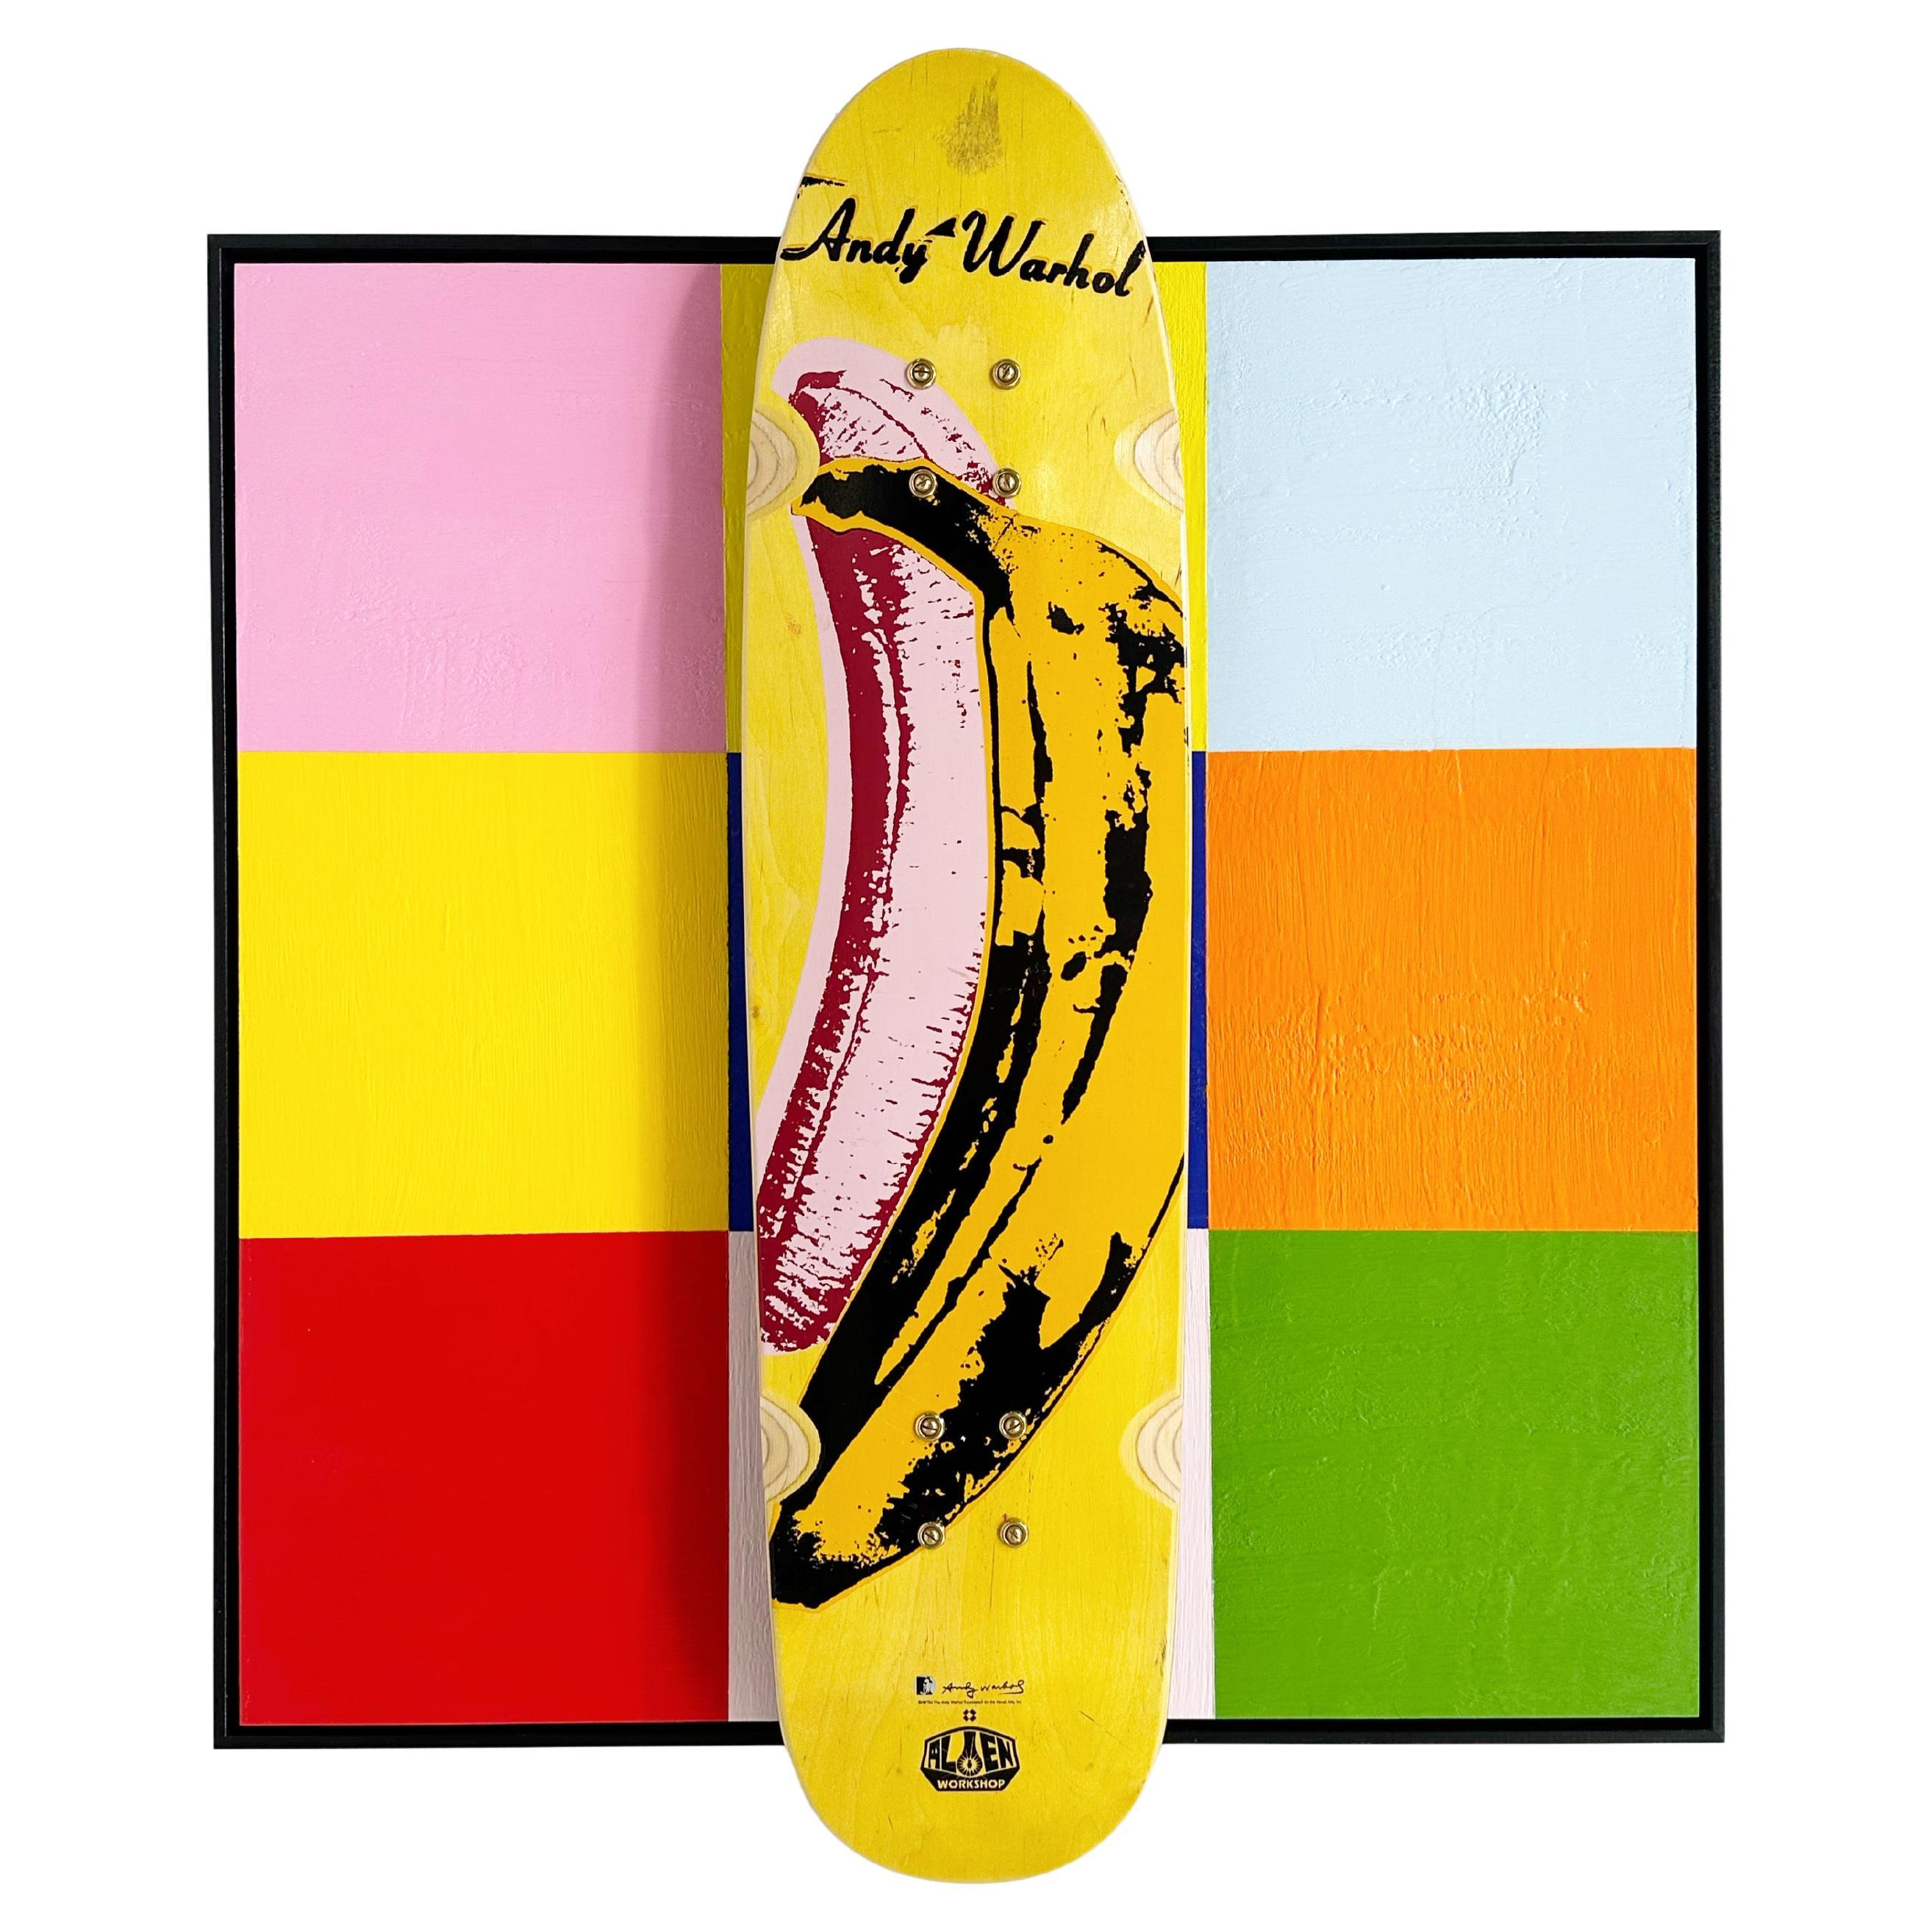 John O'Hara. Banana, 2023, peinture d'un pont à l'encaustique et de patins en vente